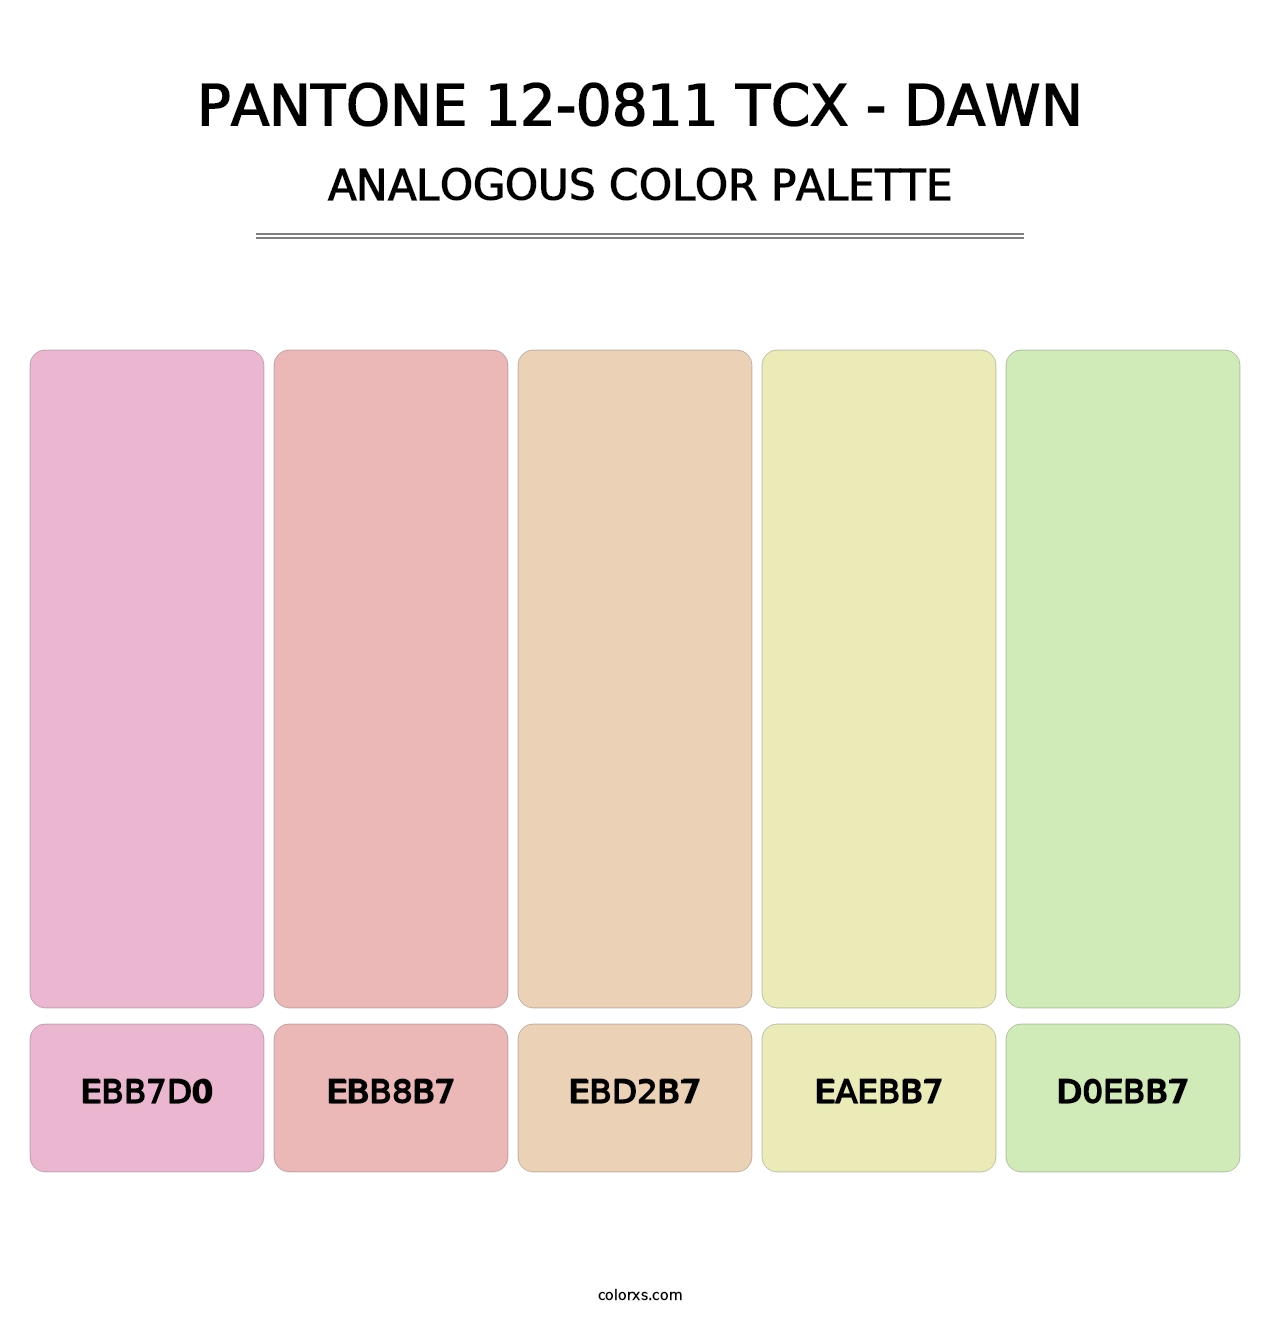 PANTONE 12-0811 TCX - Dawn - Analogous Color Palette